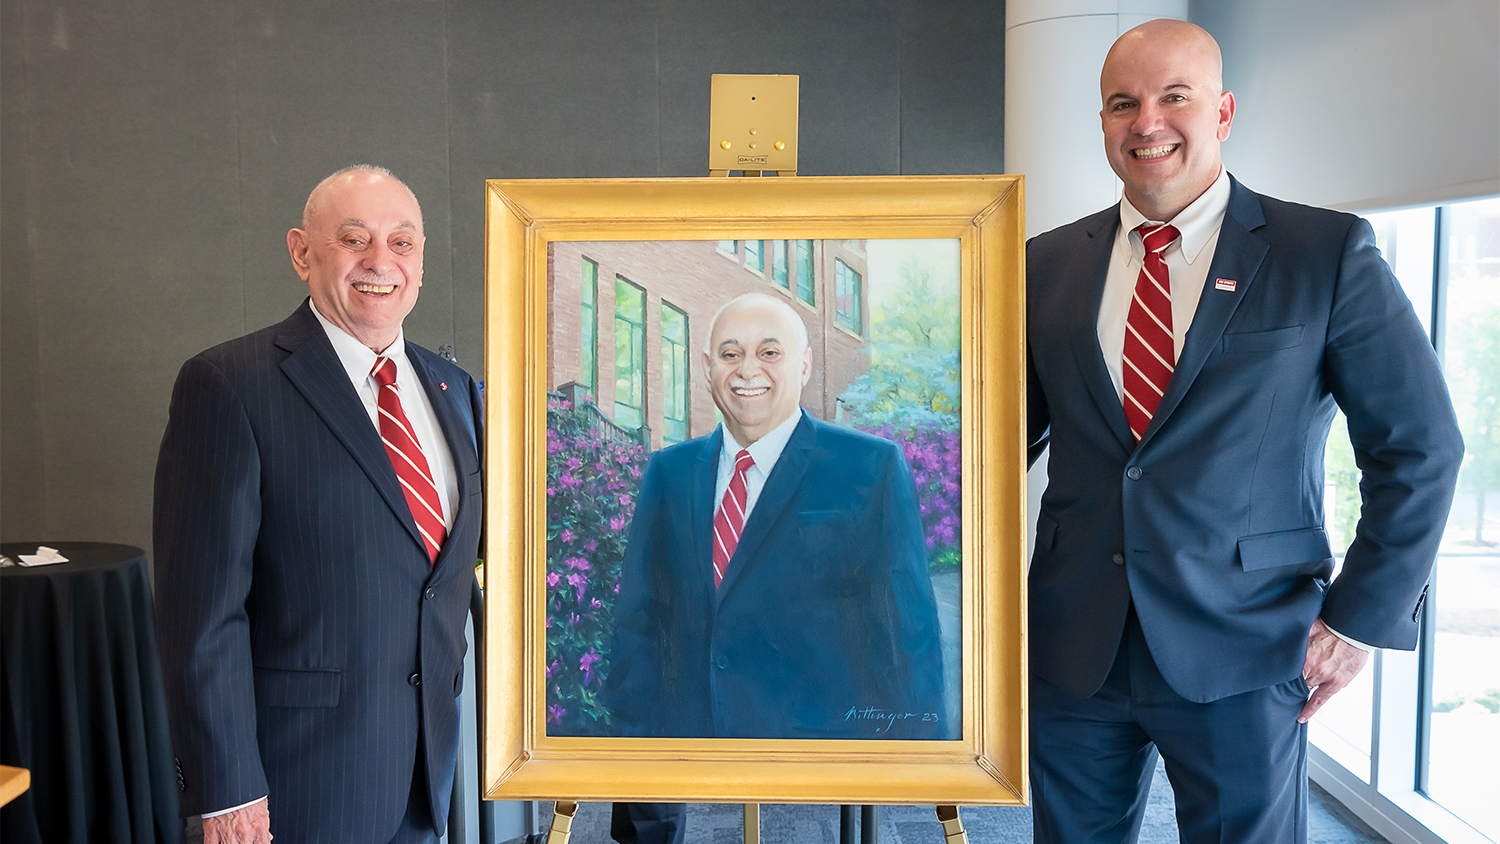 Former dean Louis Martin-Vega, left, and current dean Jim Pfaendtner, right, flank the newly revealed painted portrait of Louis-Martin Vega.